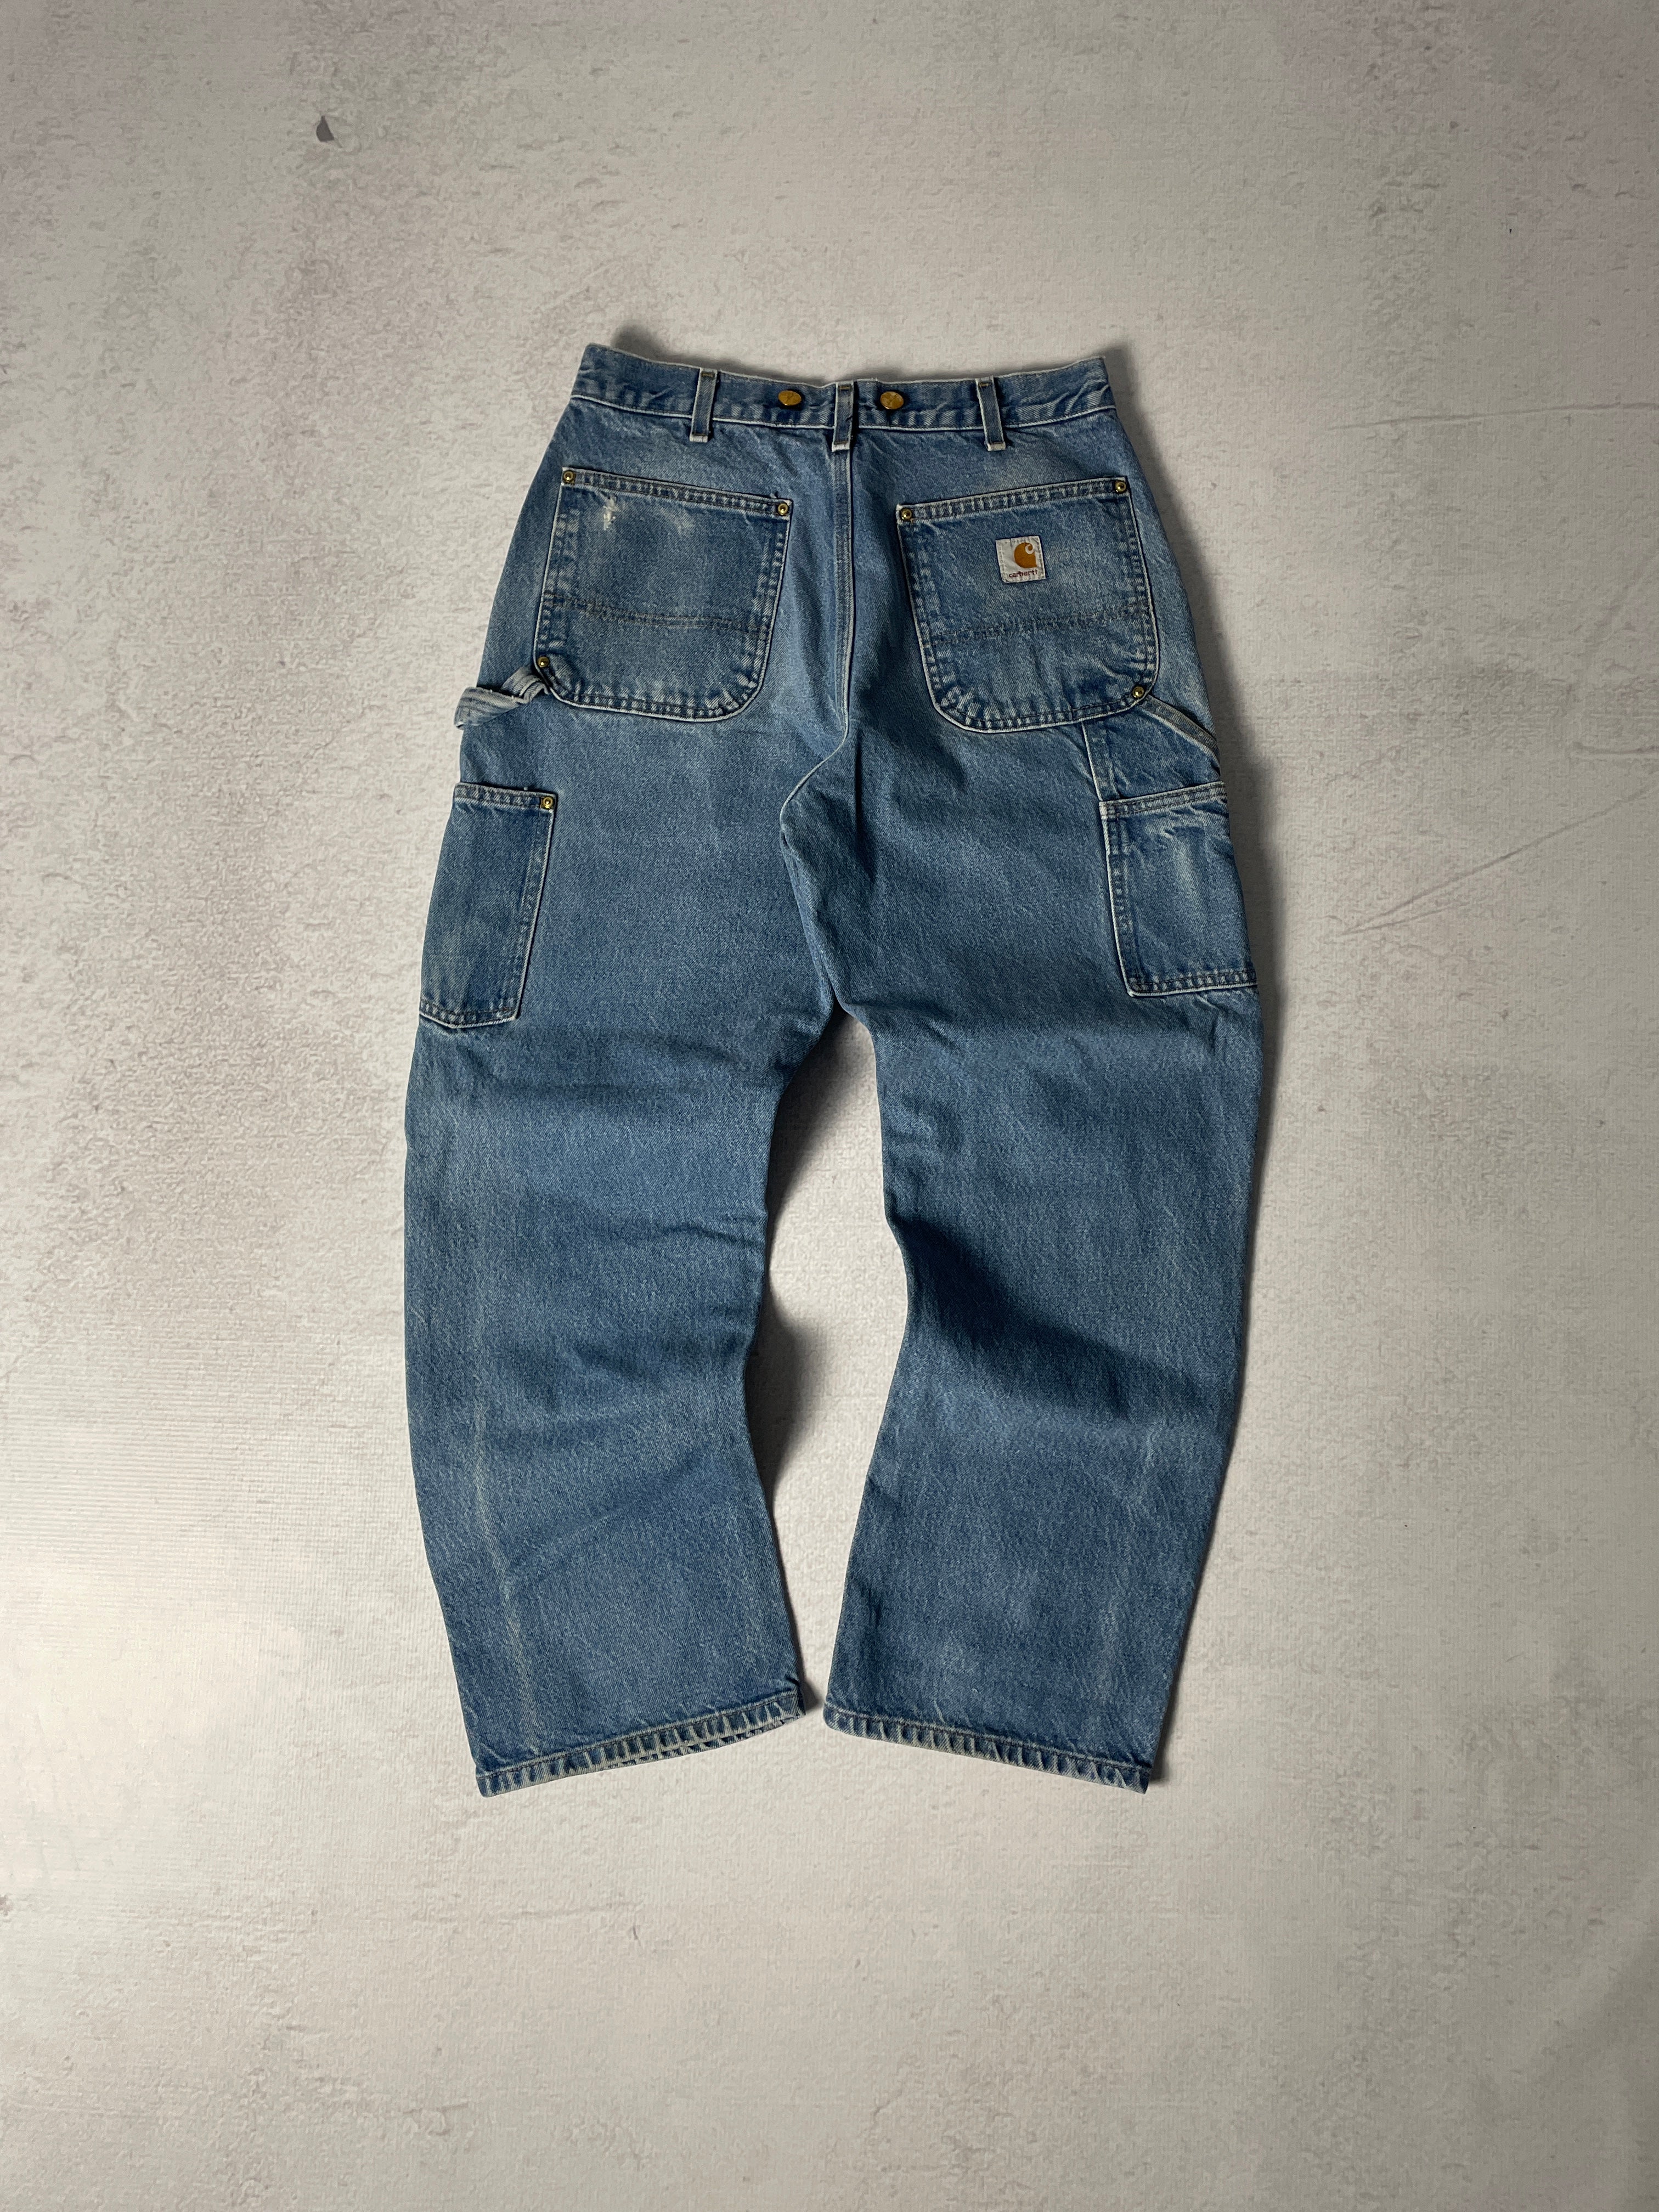 Vintage Carhartt Double Knee Jeans - Men's 32 x 30